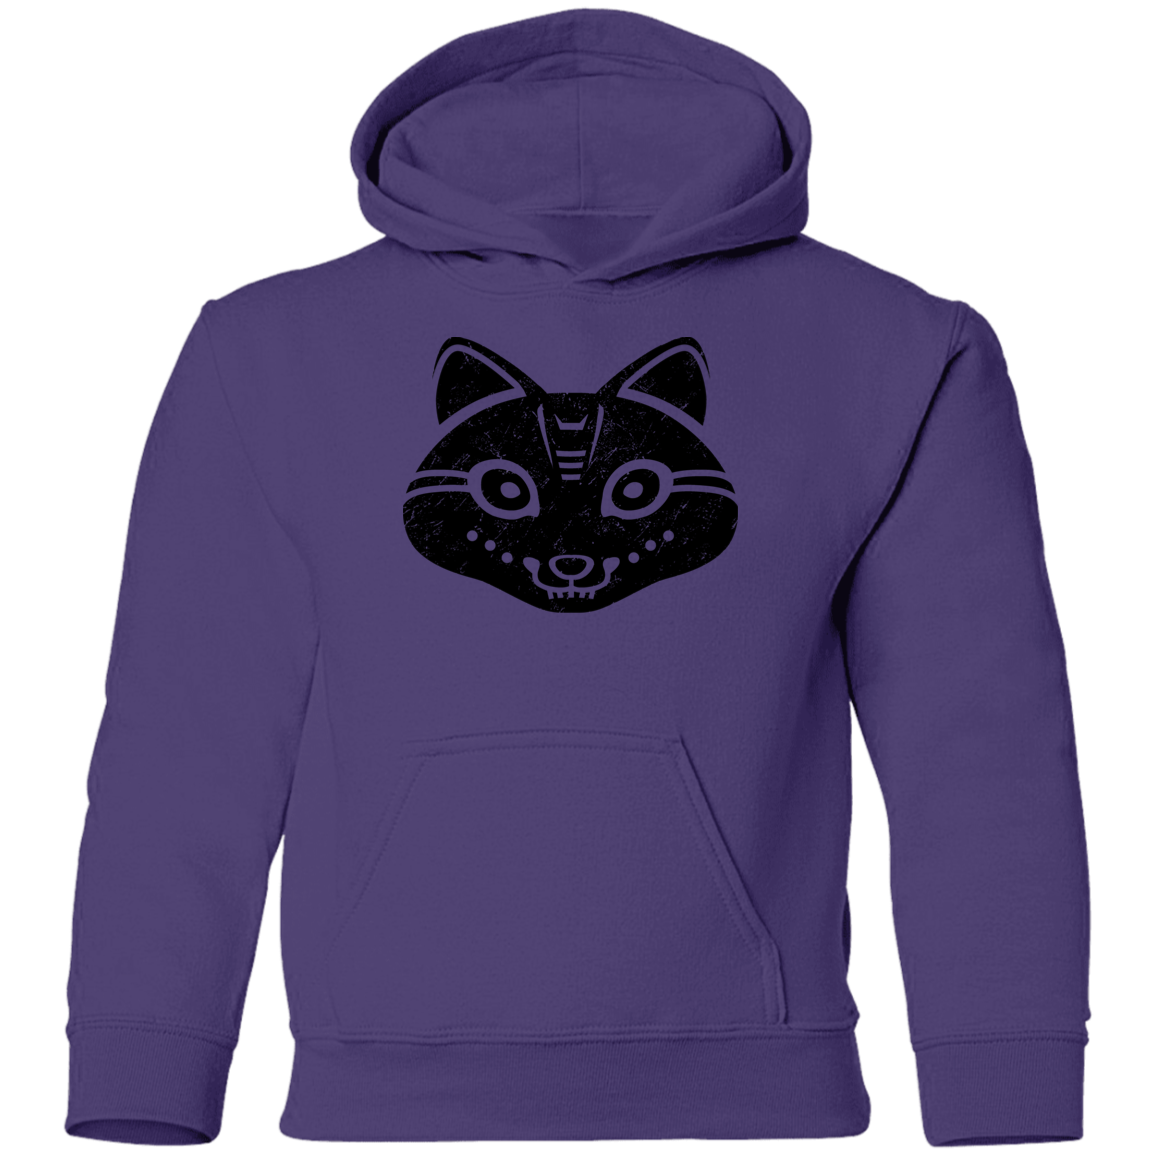 Black Distressed Emblem Hoodies for Kids (Snow Fox/Snowp)